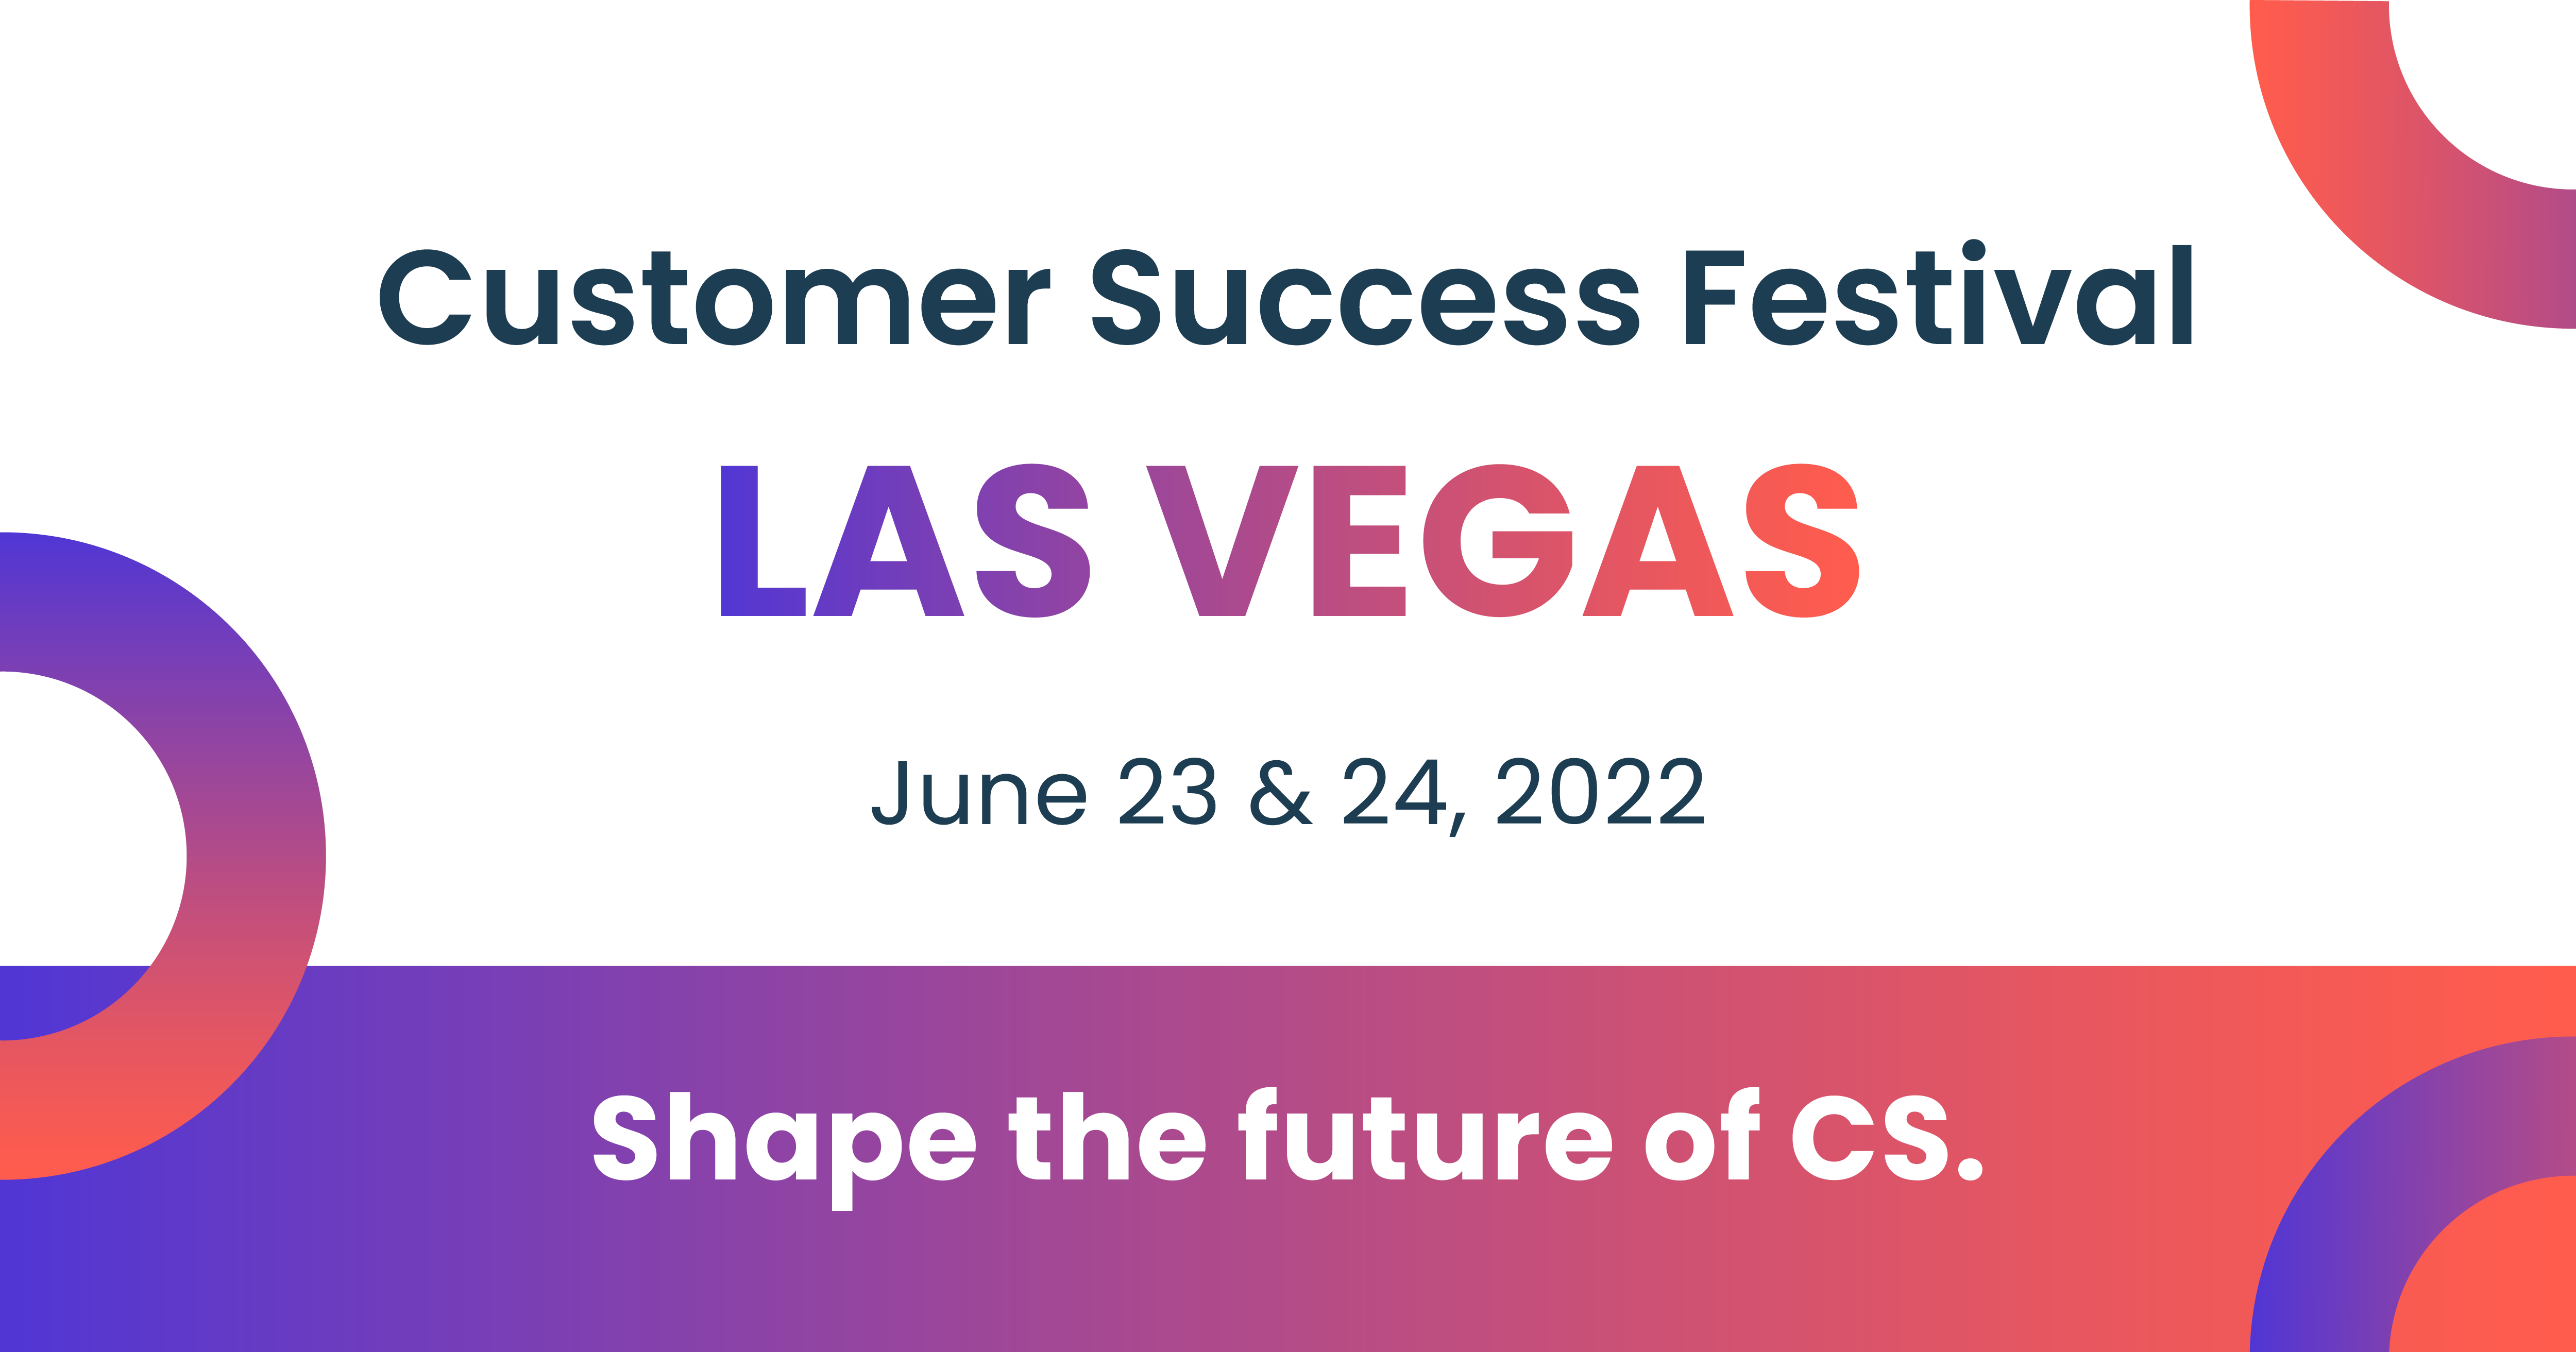 Customer Success Festival Las Vegas